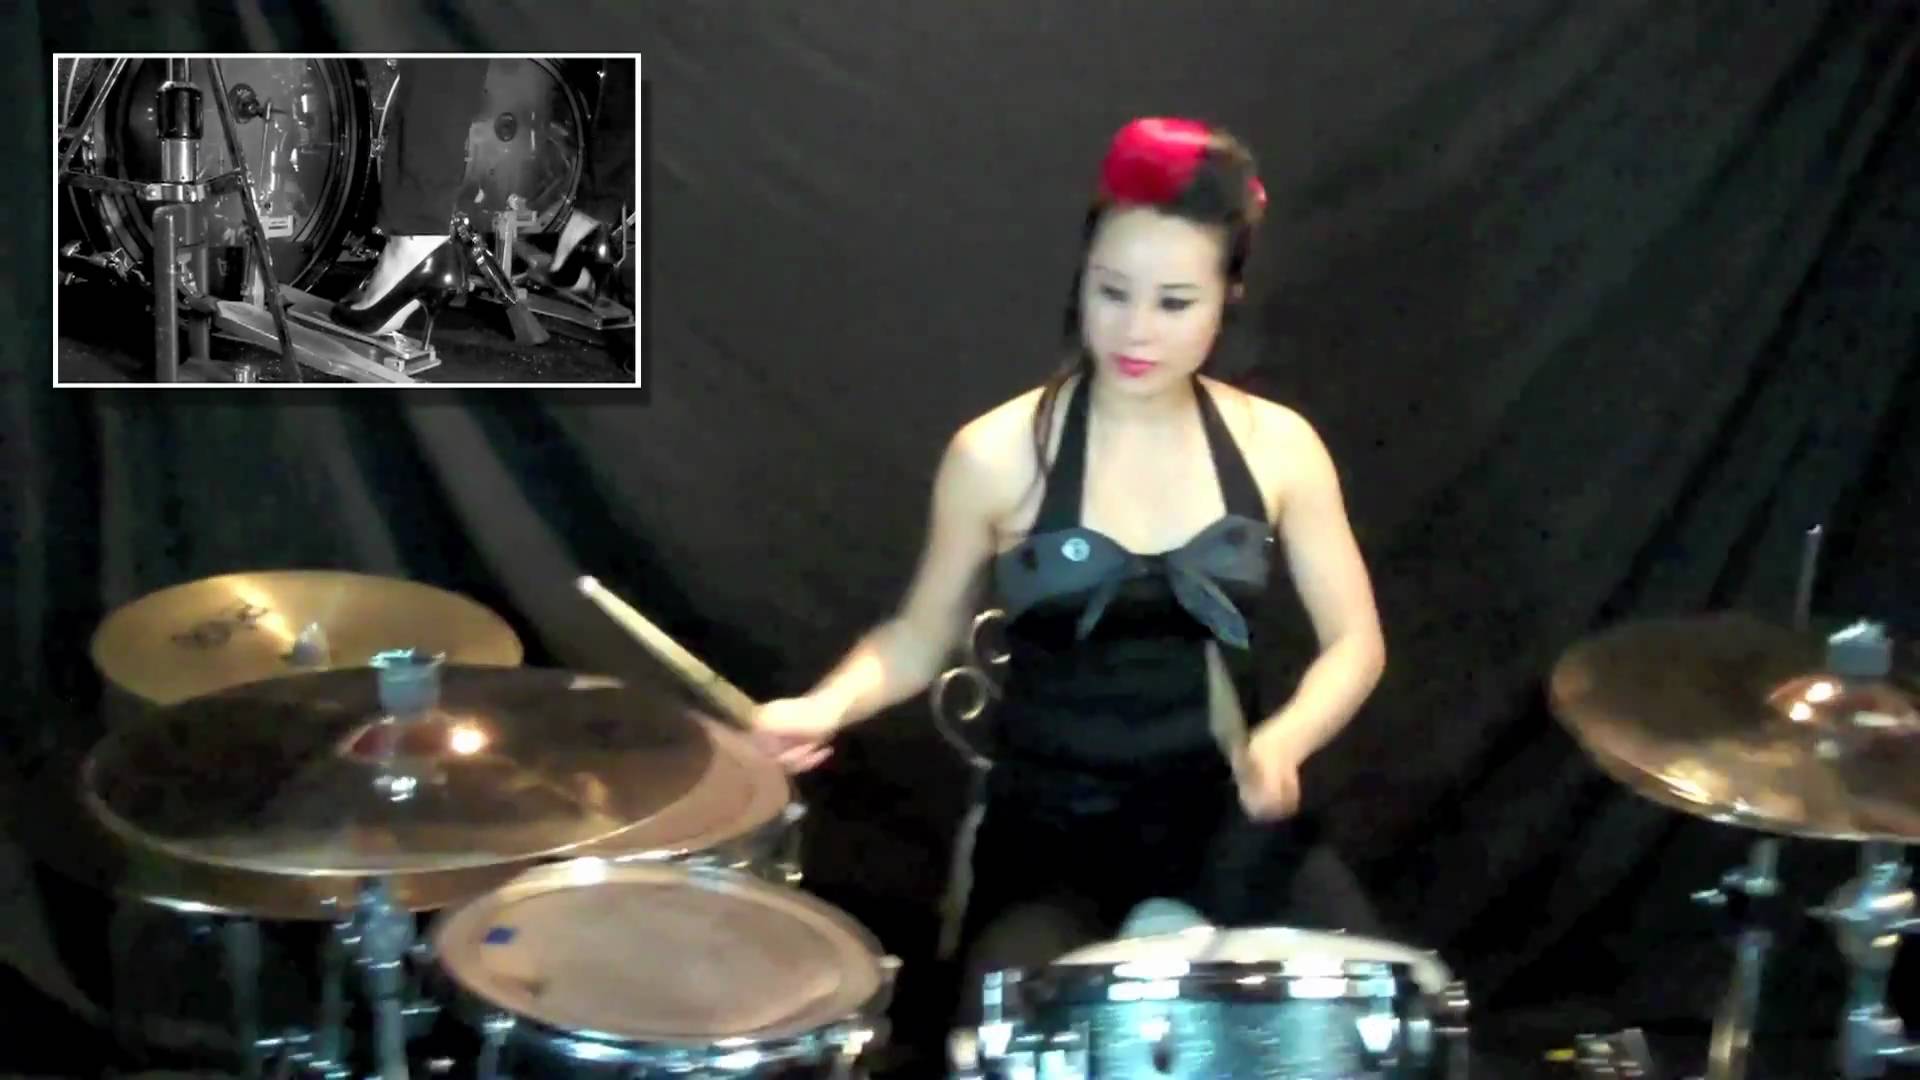 Lux Drummerette #9